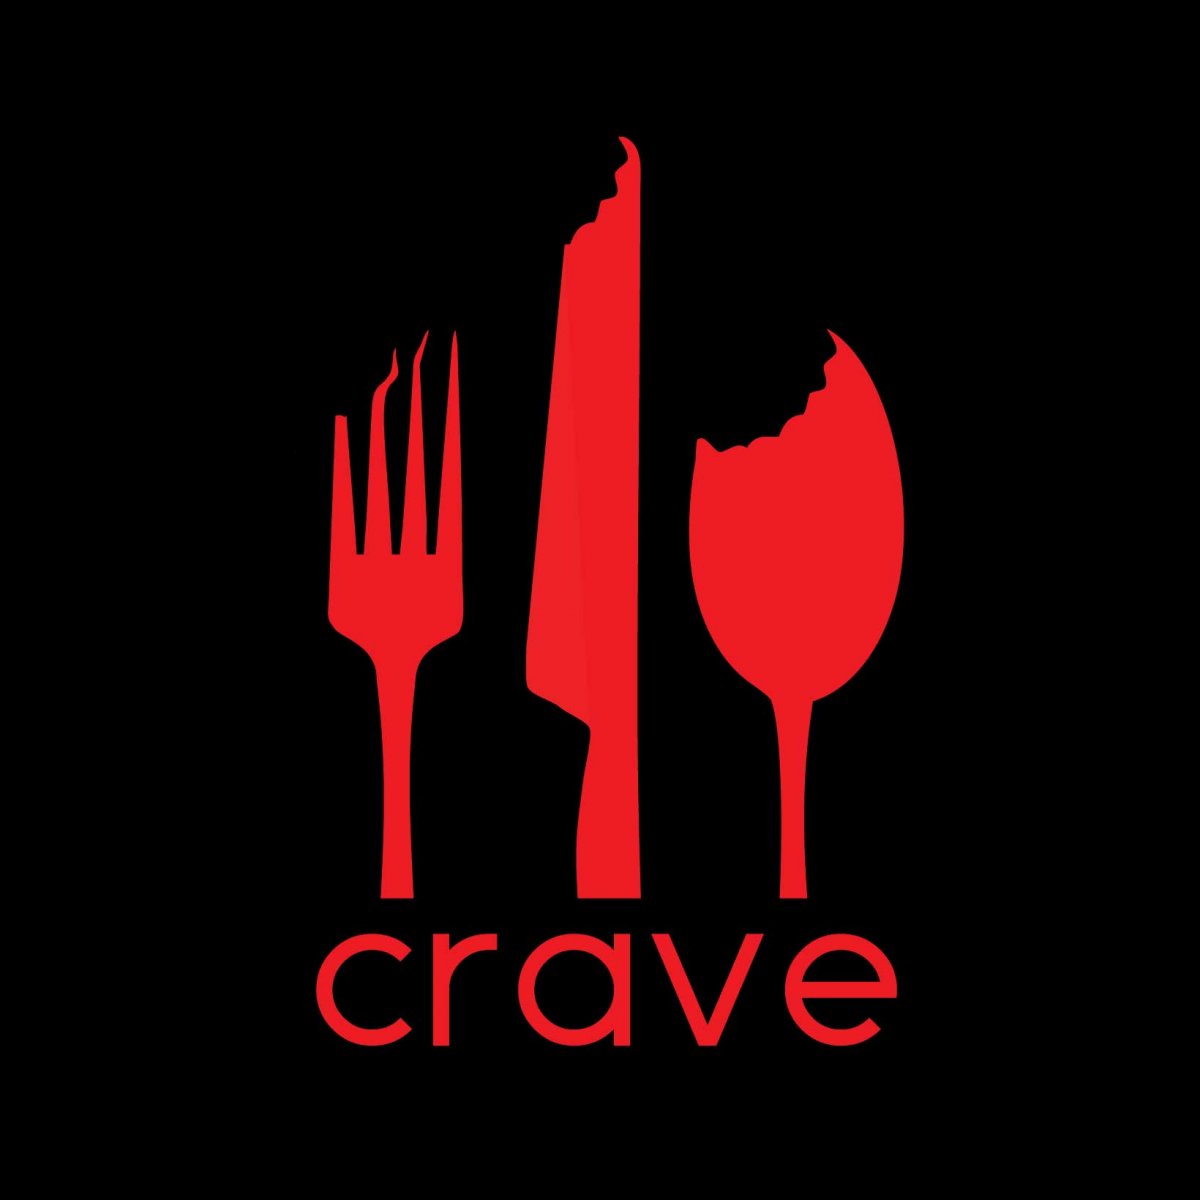 Crave Restaurant